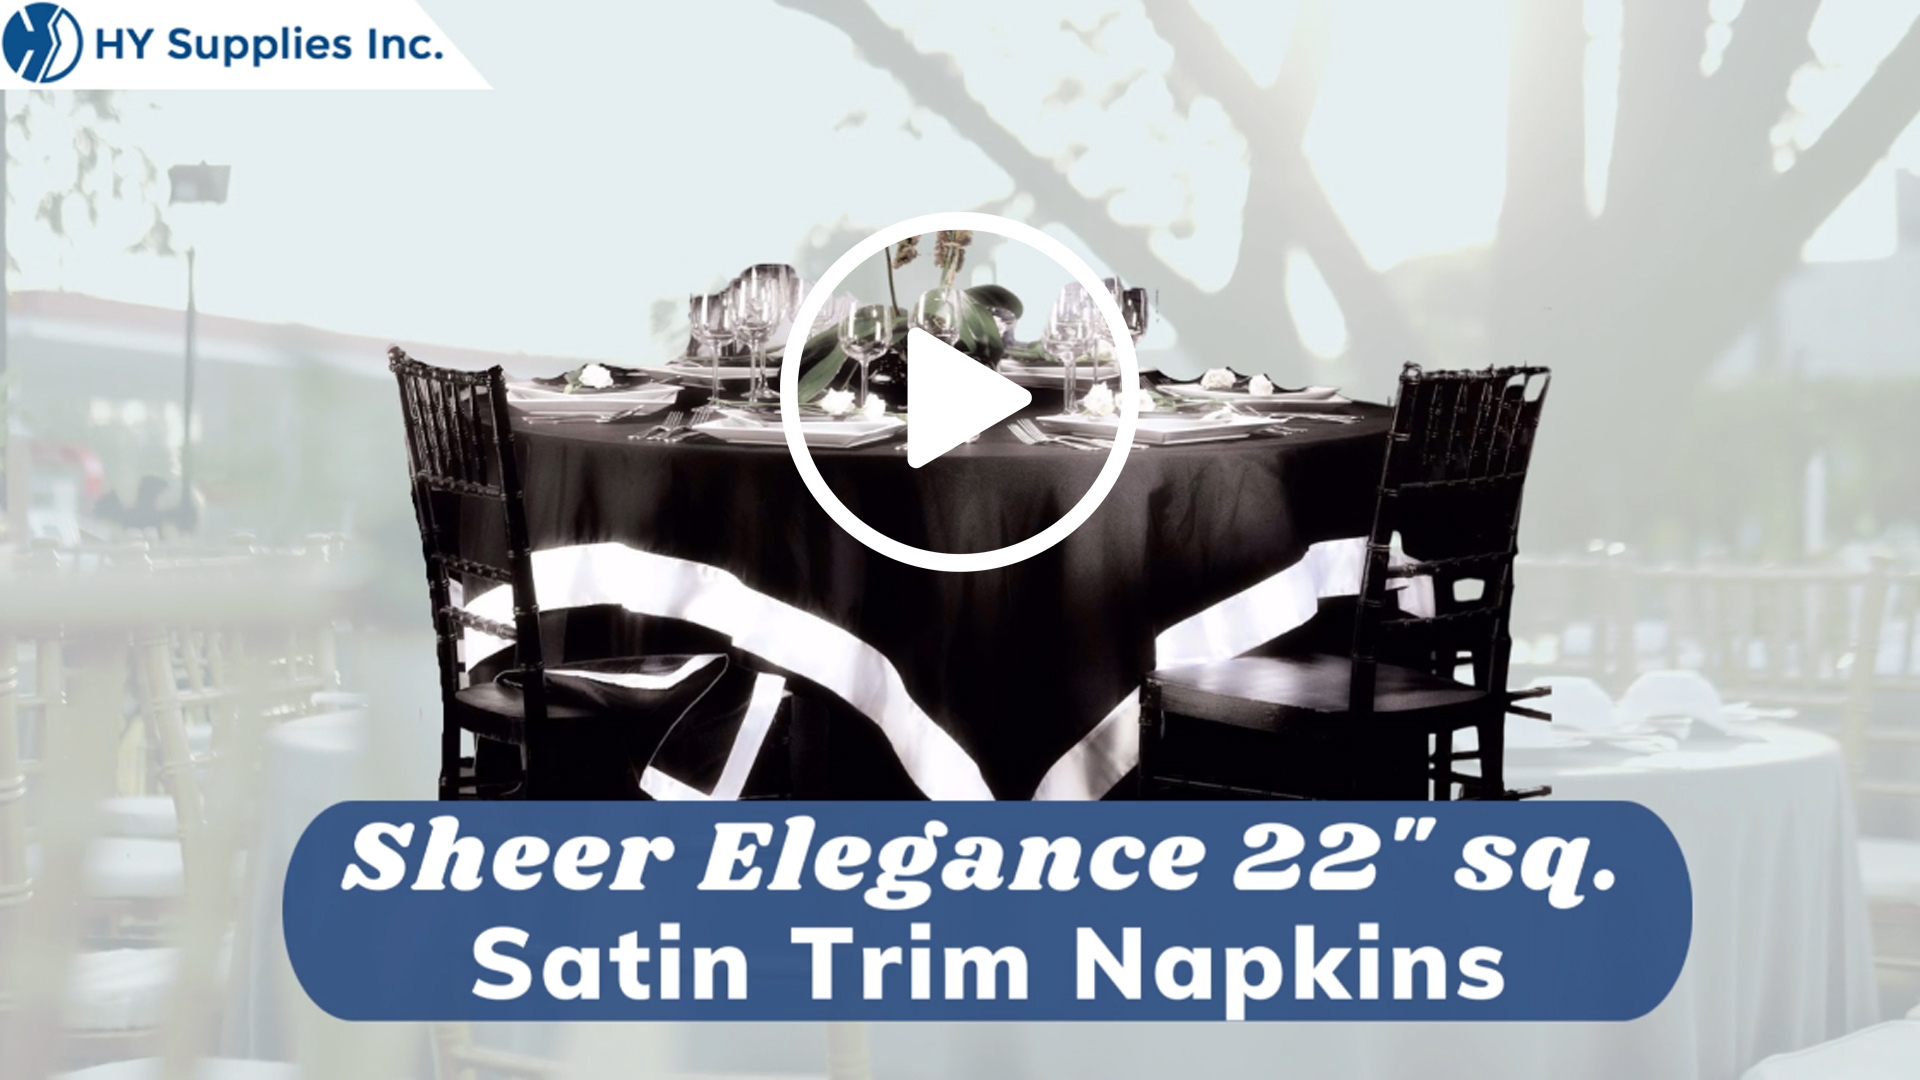 Sheer Elegance 22" sq. Satin Trim Napkins